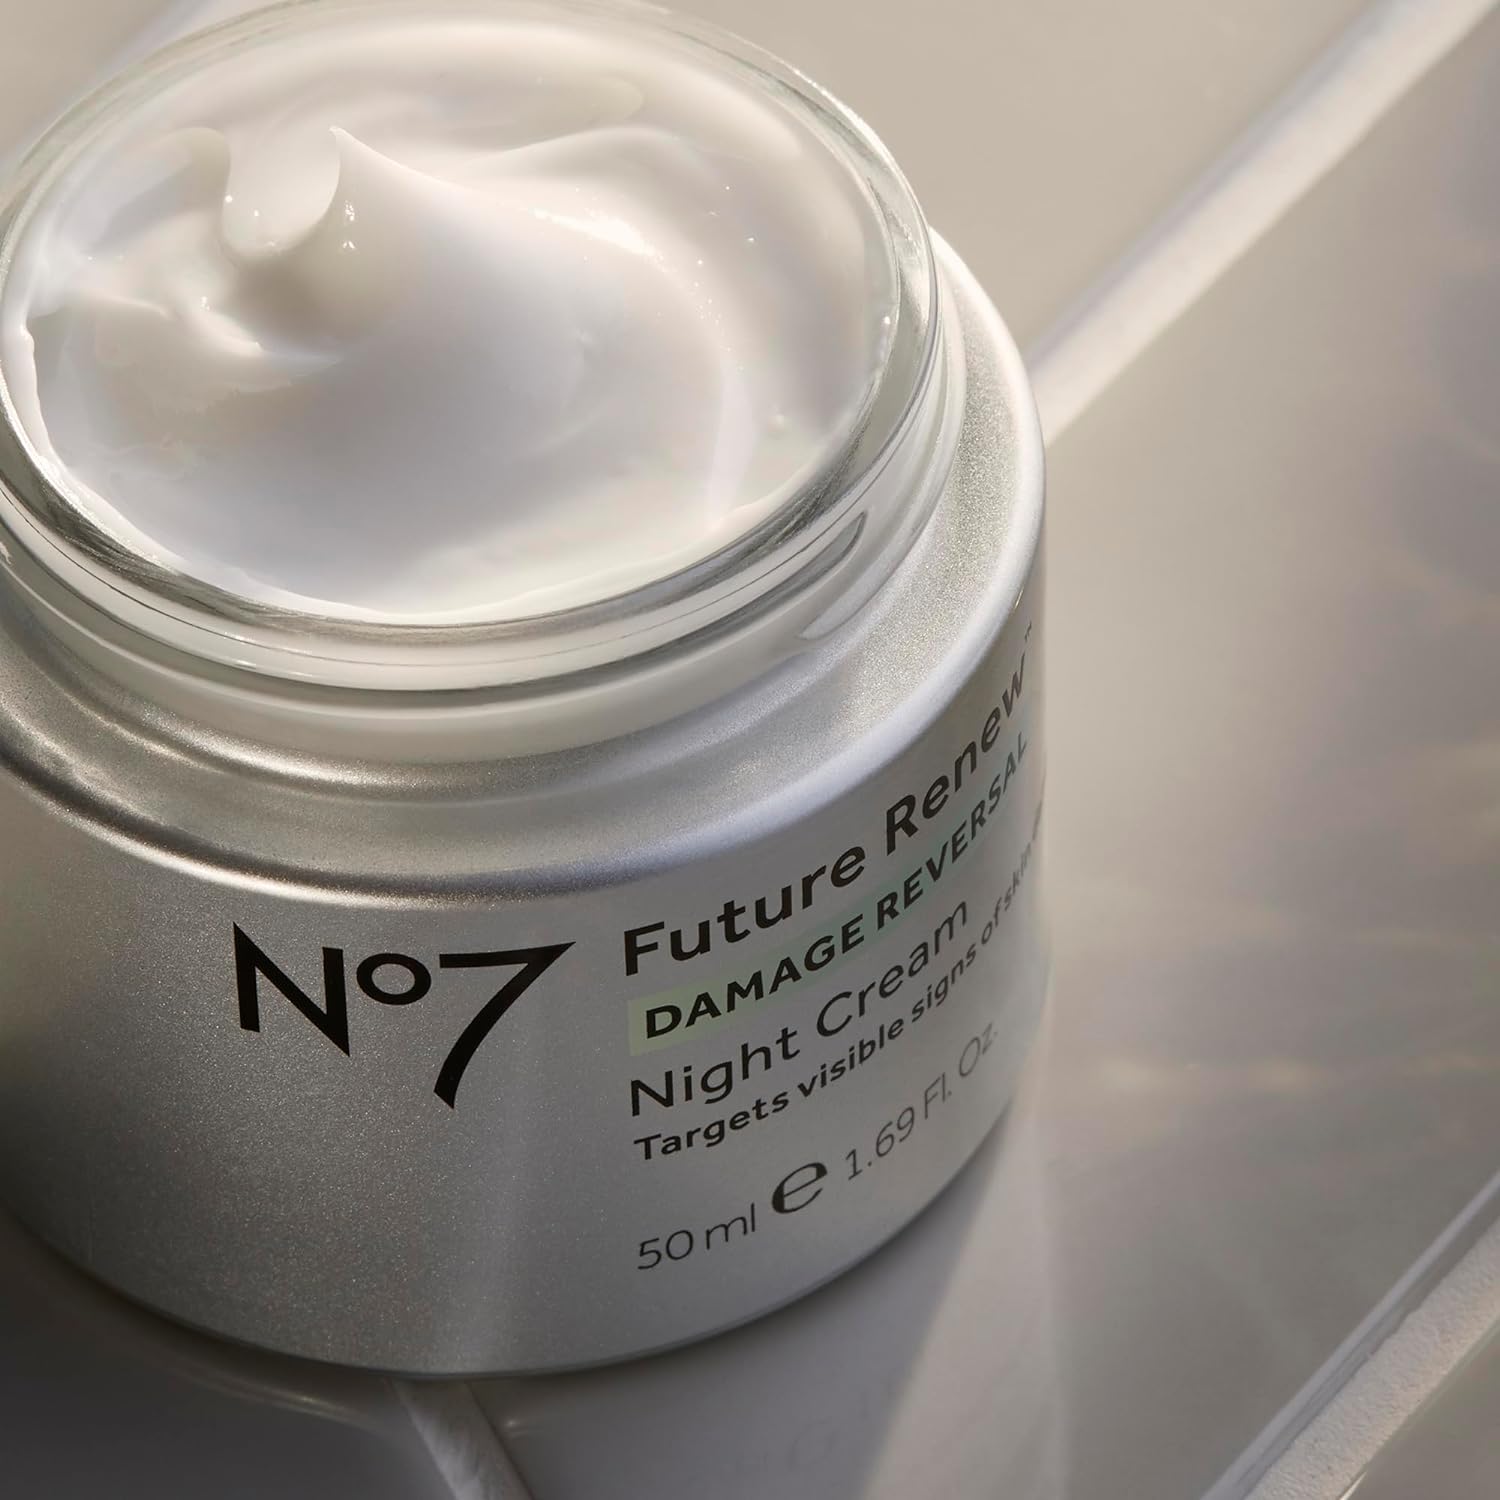 Esupli.com No7 Future Renew Damage Reversal Night Cream - Nightly Face 